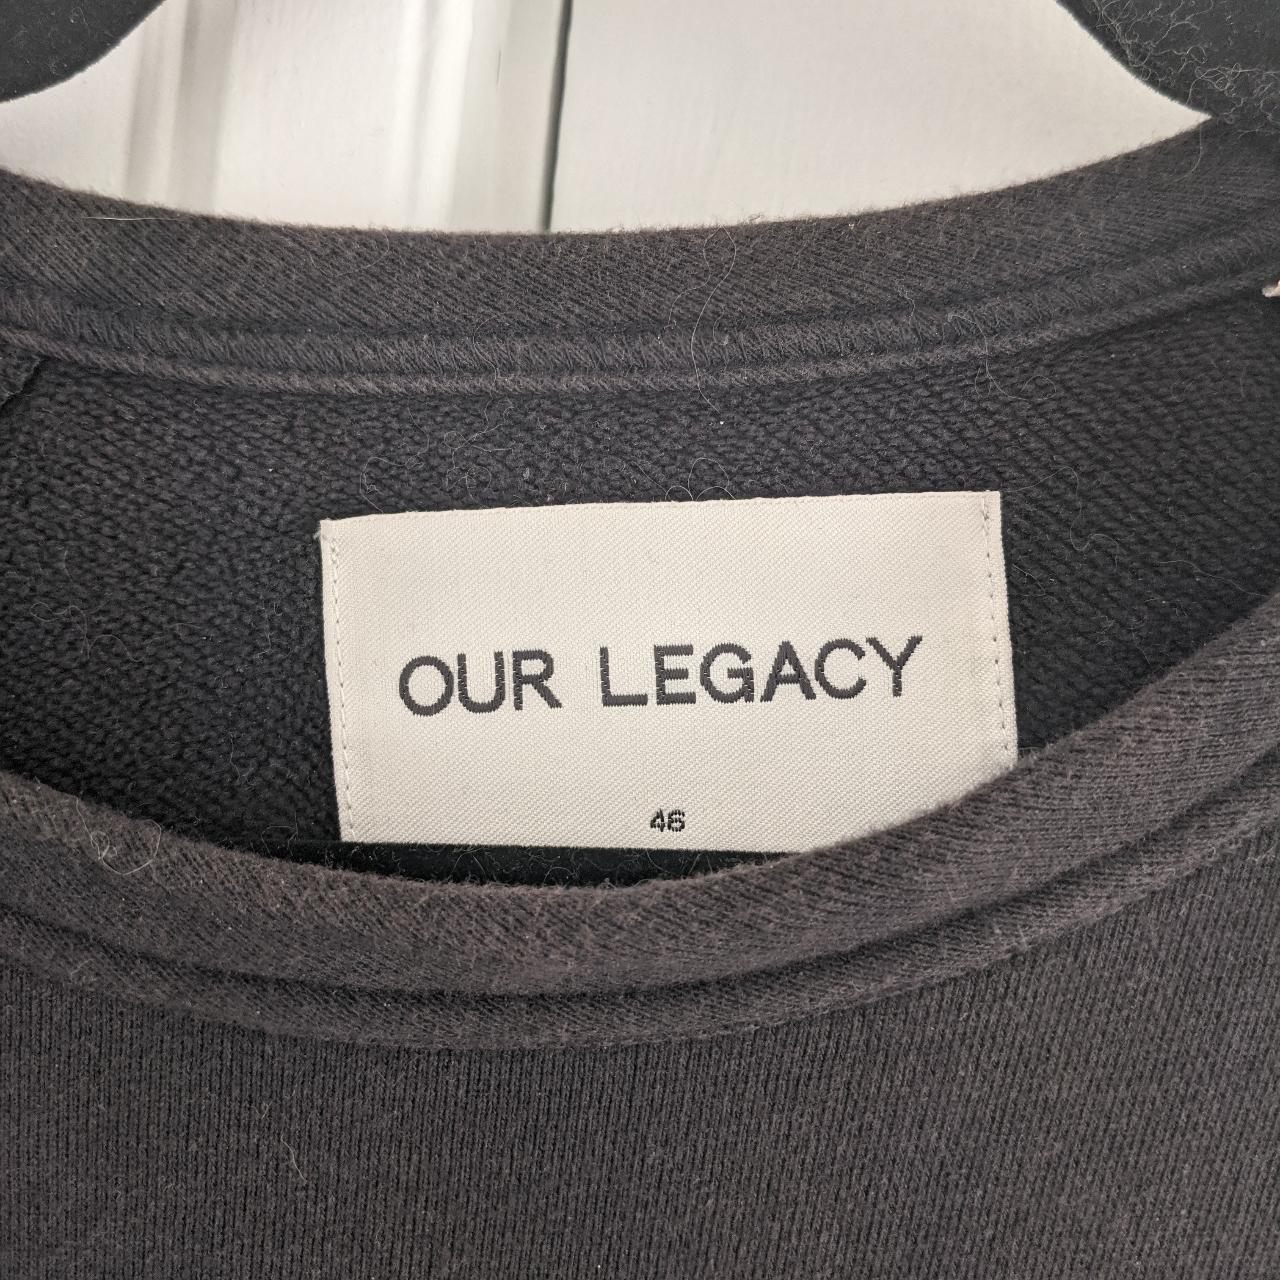 Our Legacy Men's Black Sweatshirt